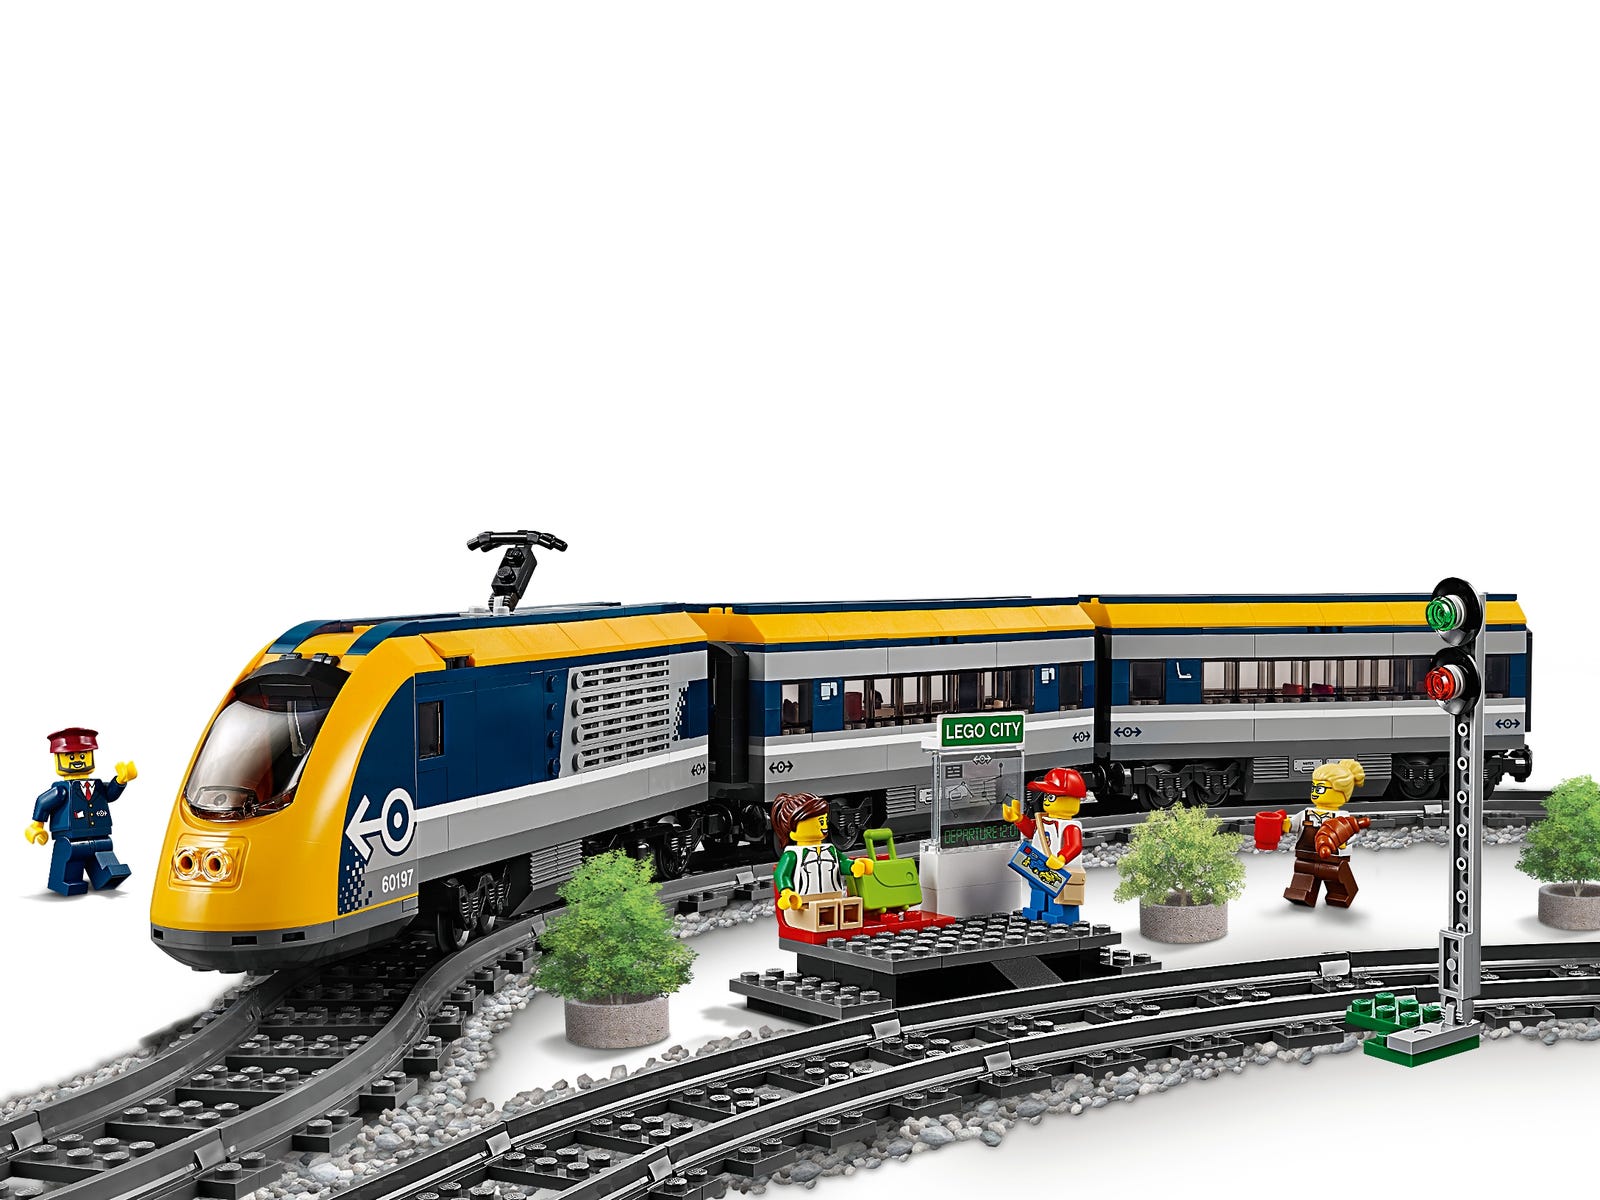 LEGO City Passagierstrein 60197 huren